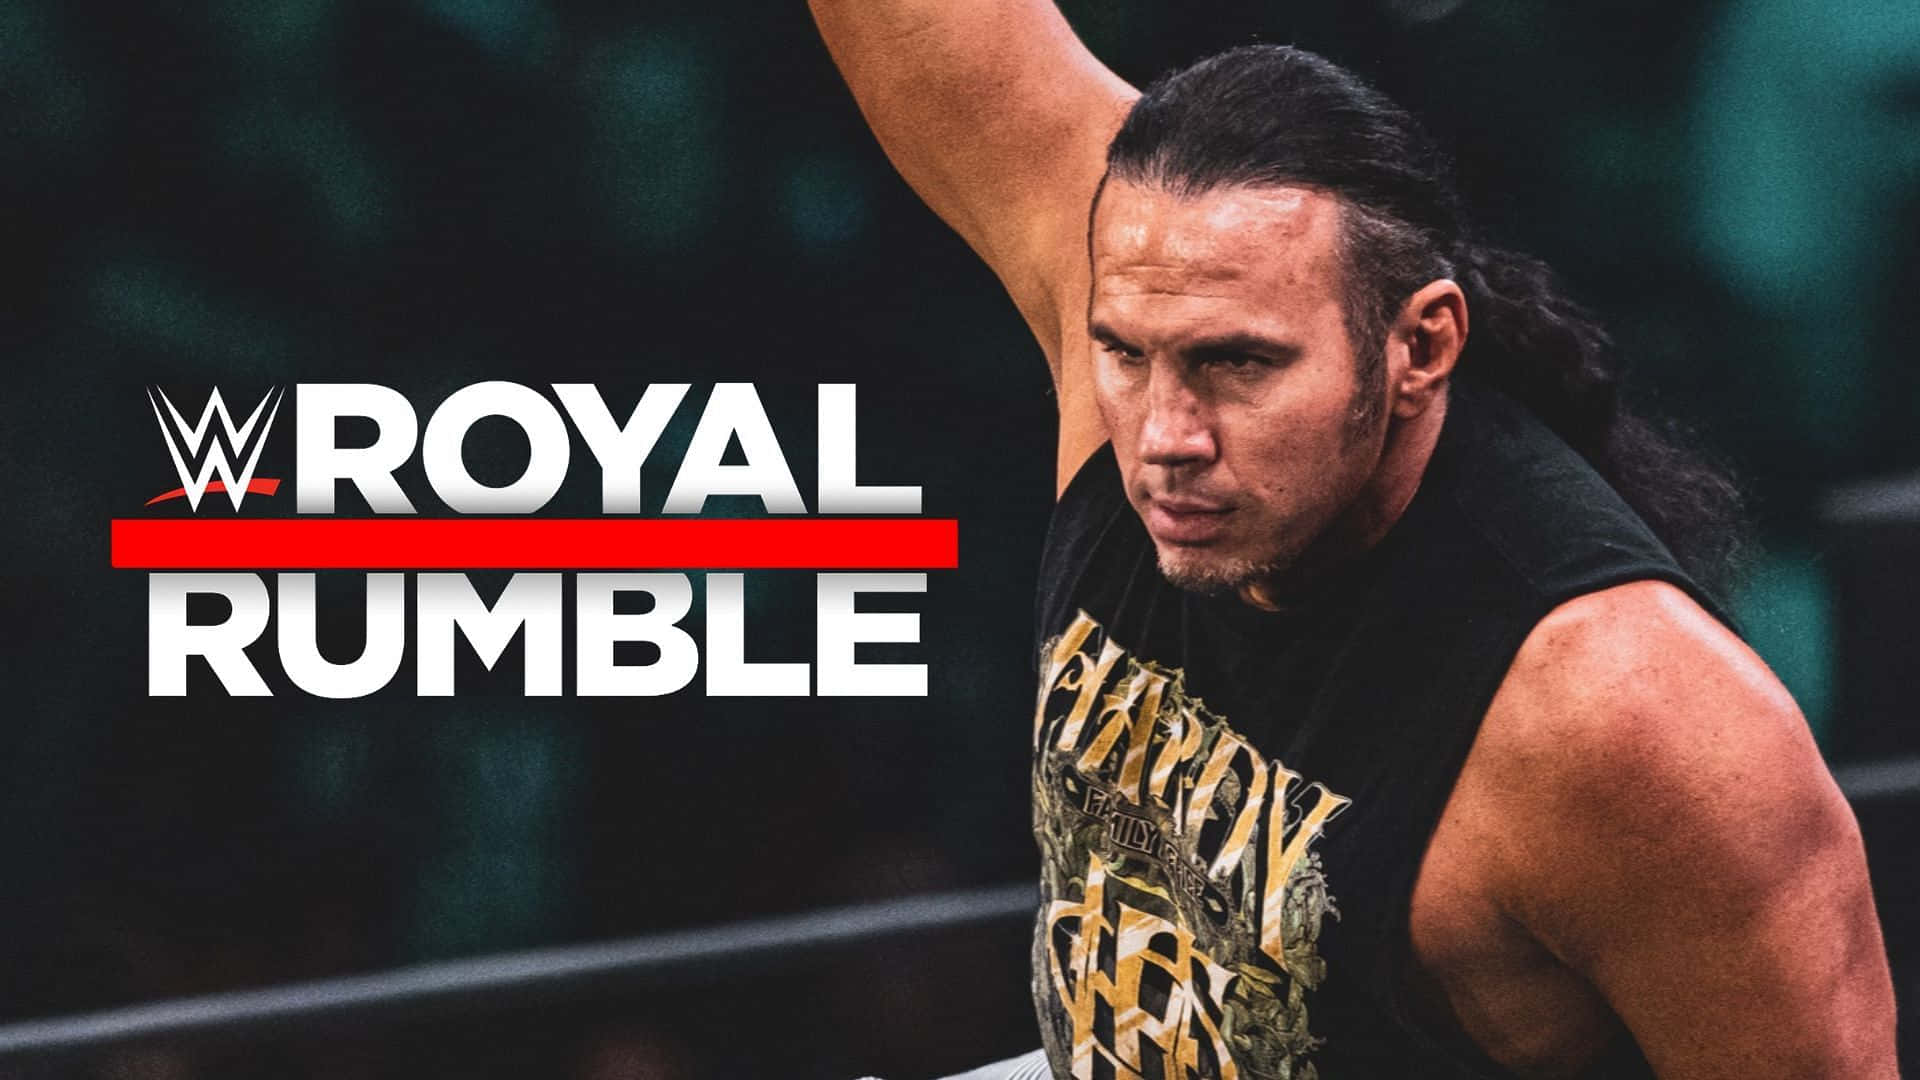 Wwe American Wrestler Matt Hardy Royal Rumble Wallpaper